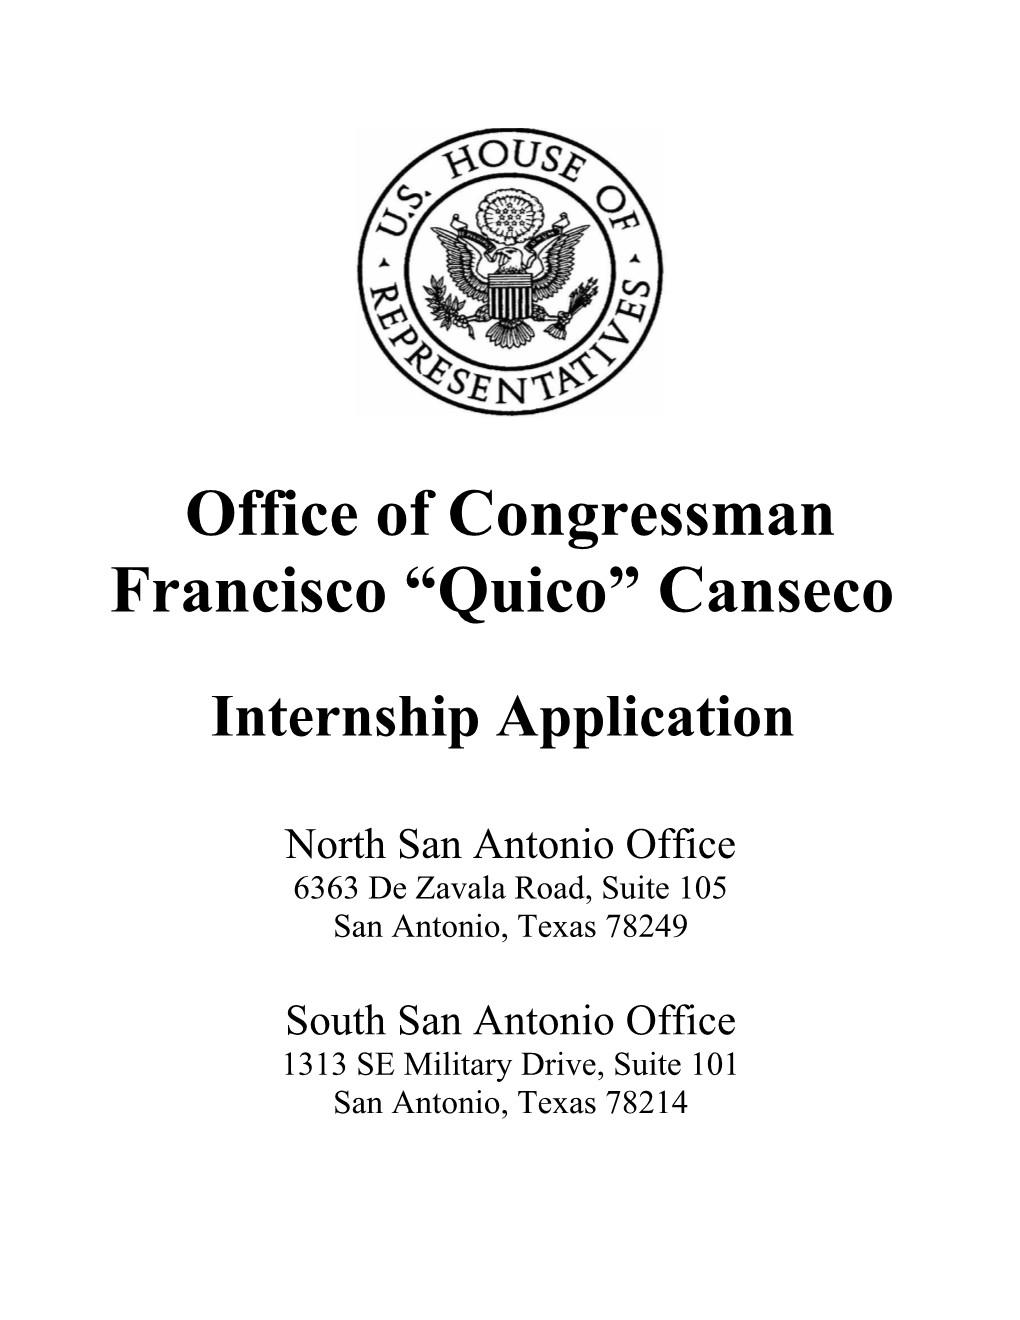 Office of Congressman Francisco Quico Canseco